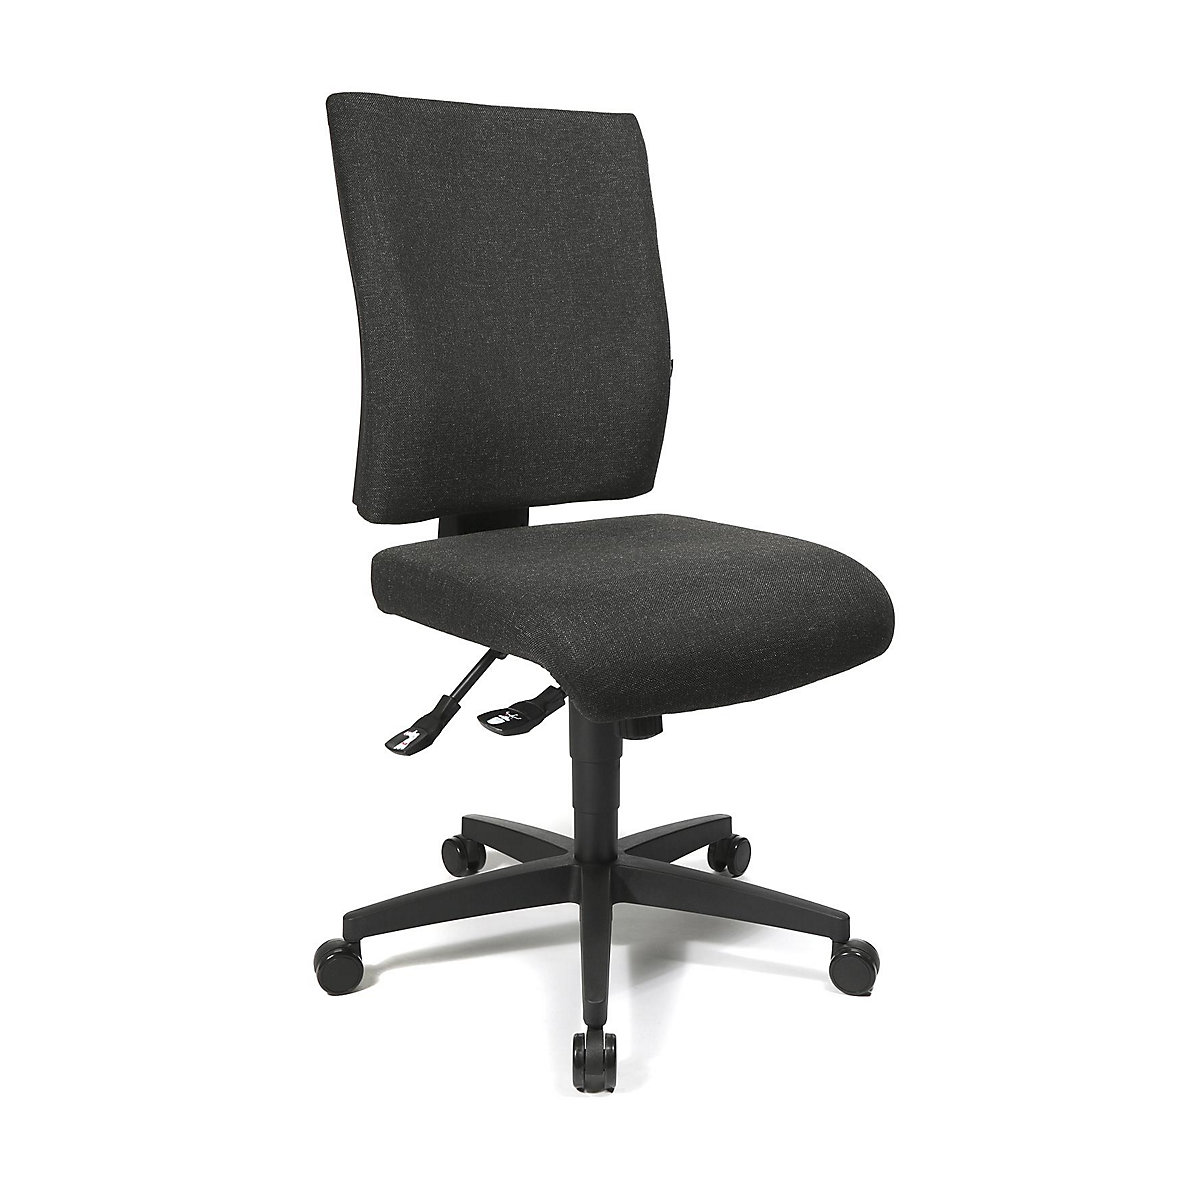 COMFORT office swivel chair - Topstar